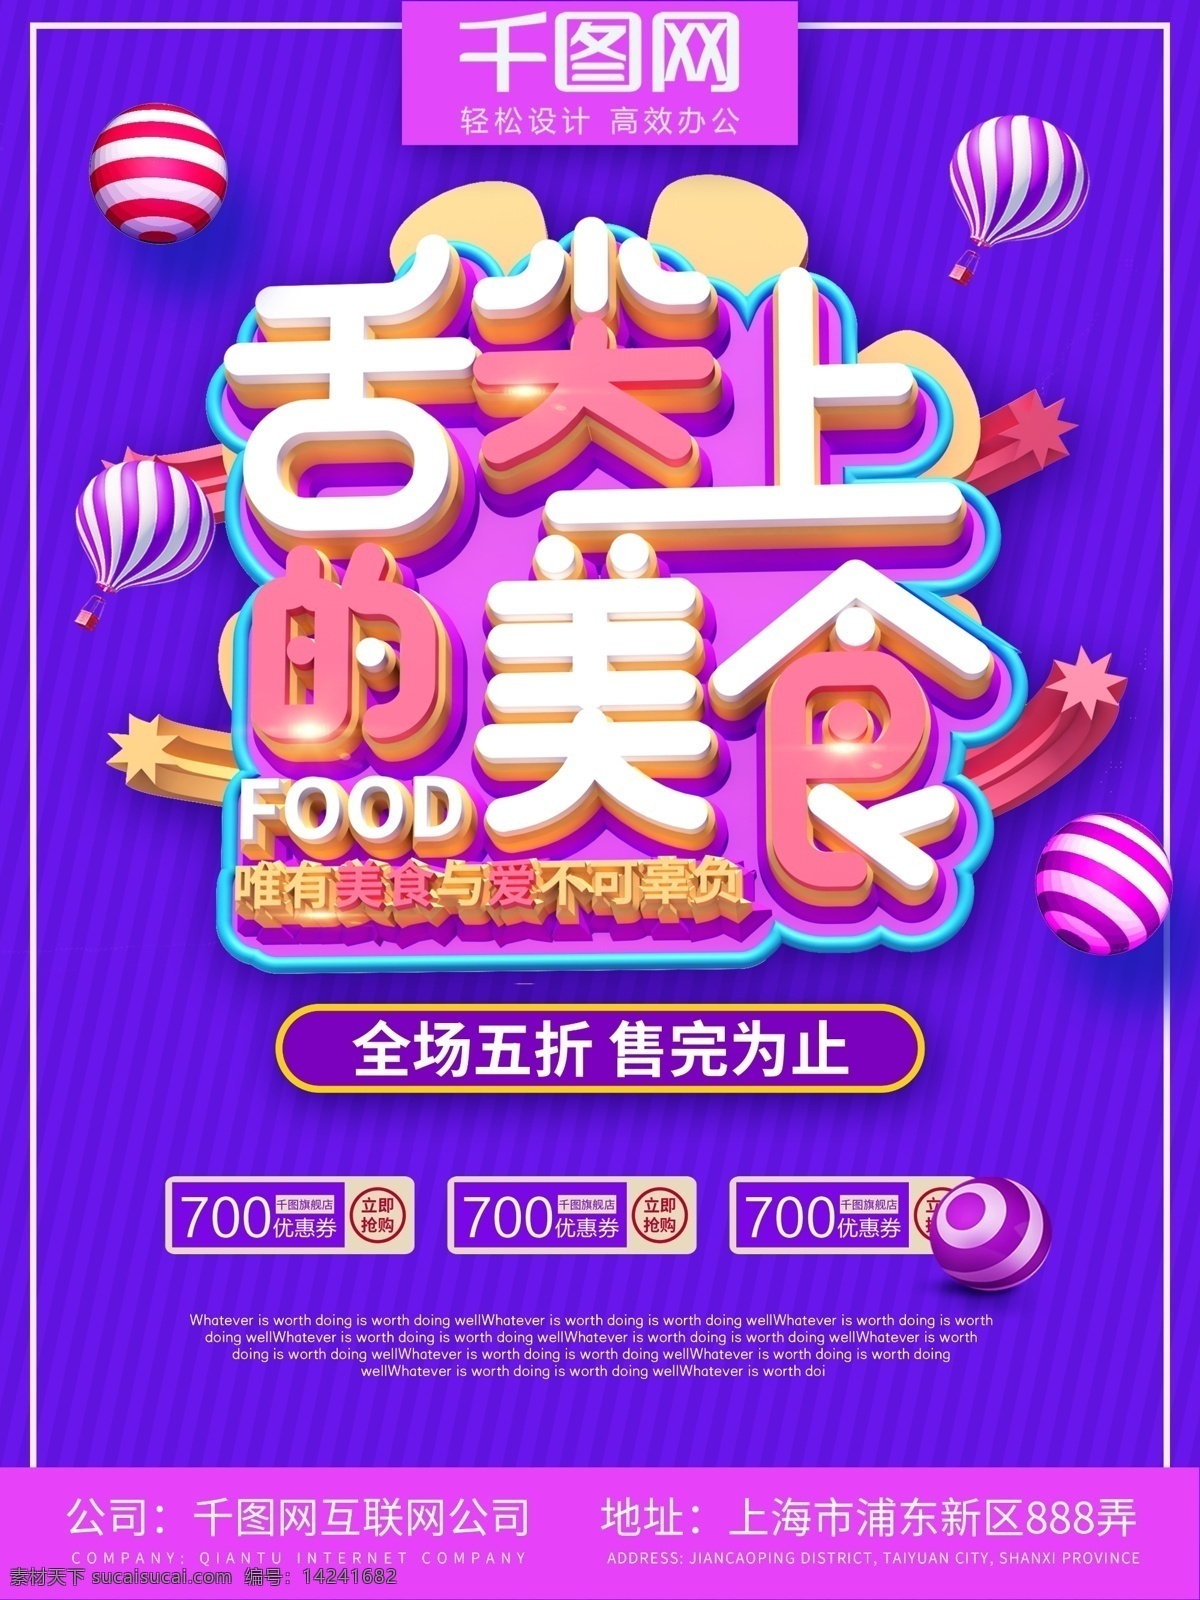 c4d 美食 促销 海报 促销海报 美味 舌尖上的美食 紫色海报 美食促销 味觉